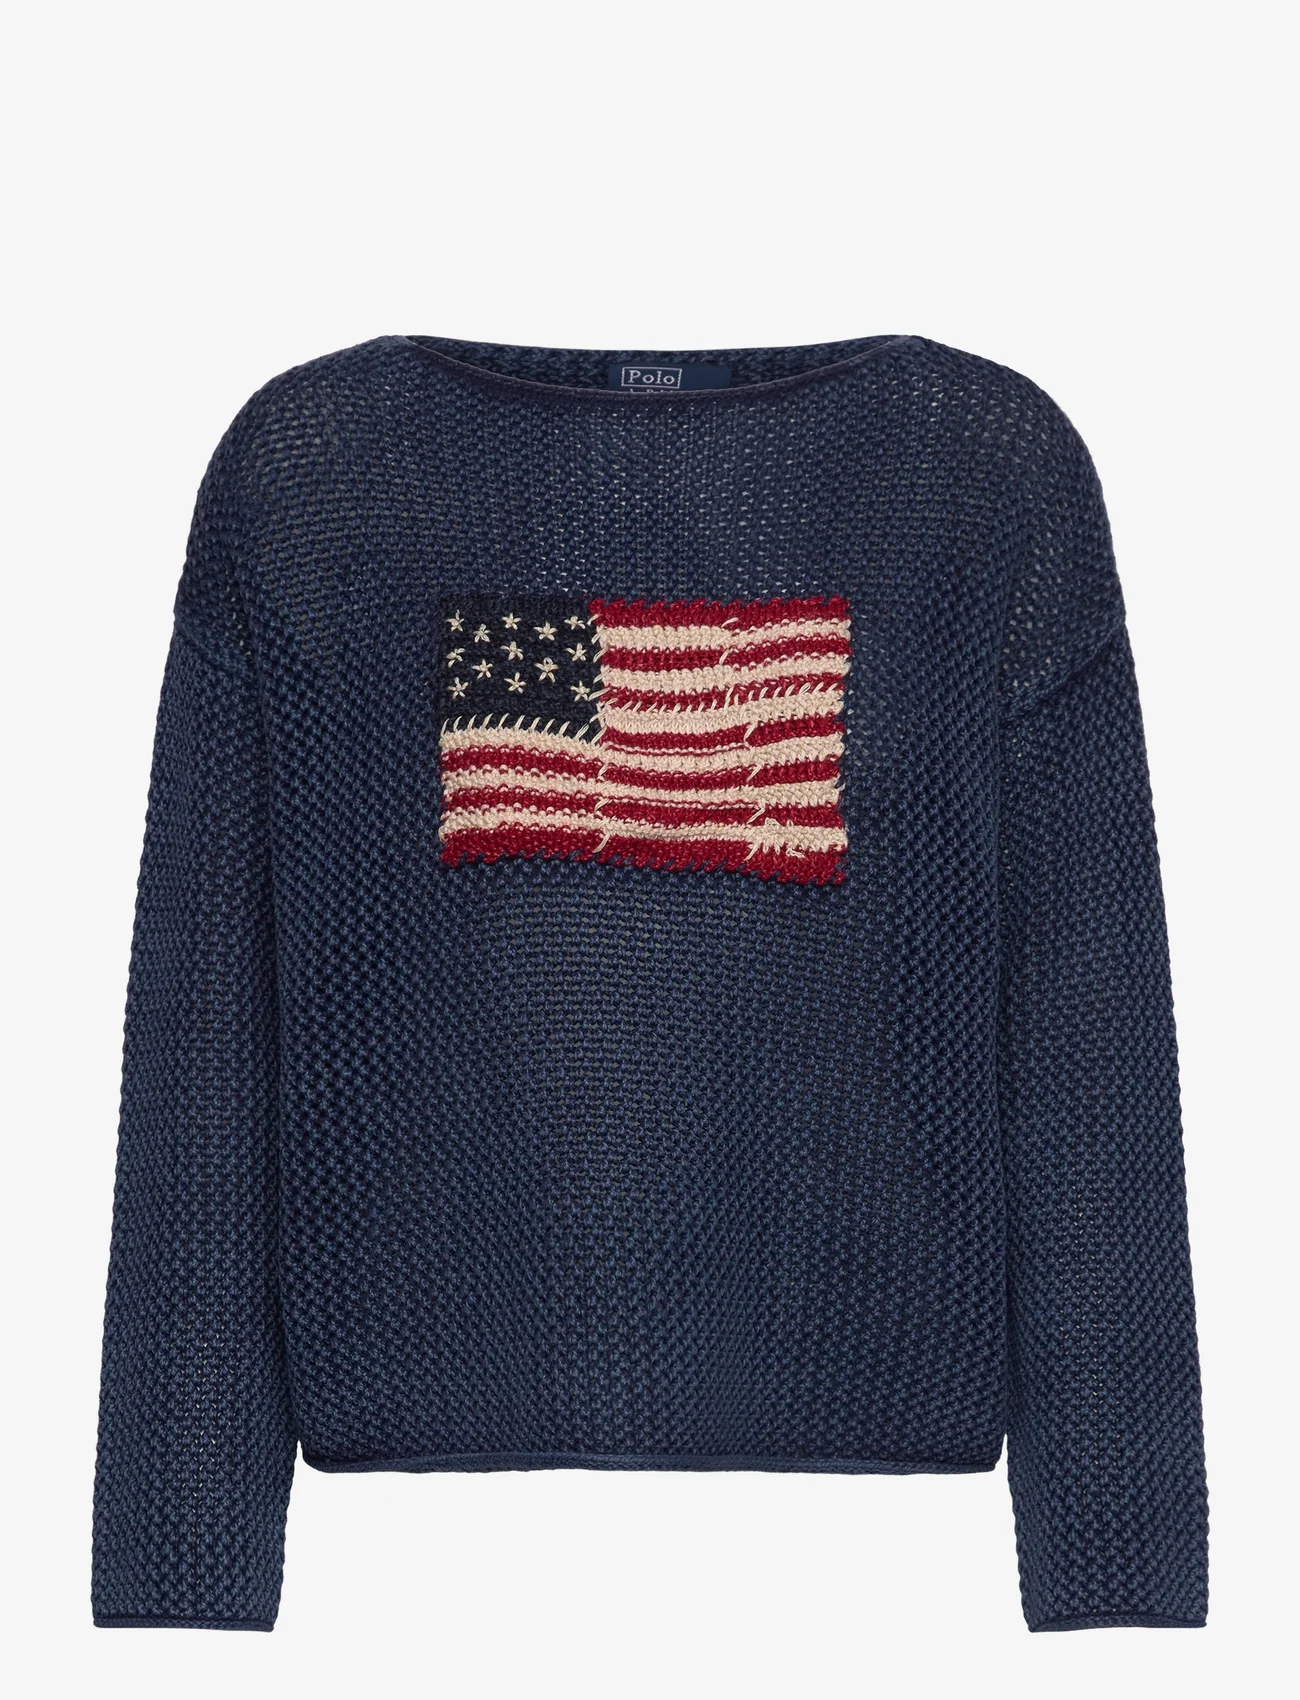 Polo Ralph Lauren - Flag Pointelle Cotton-Linen Sweater - pullover - blue multi - 0